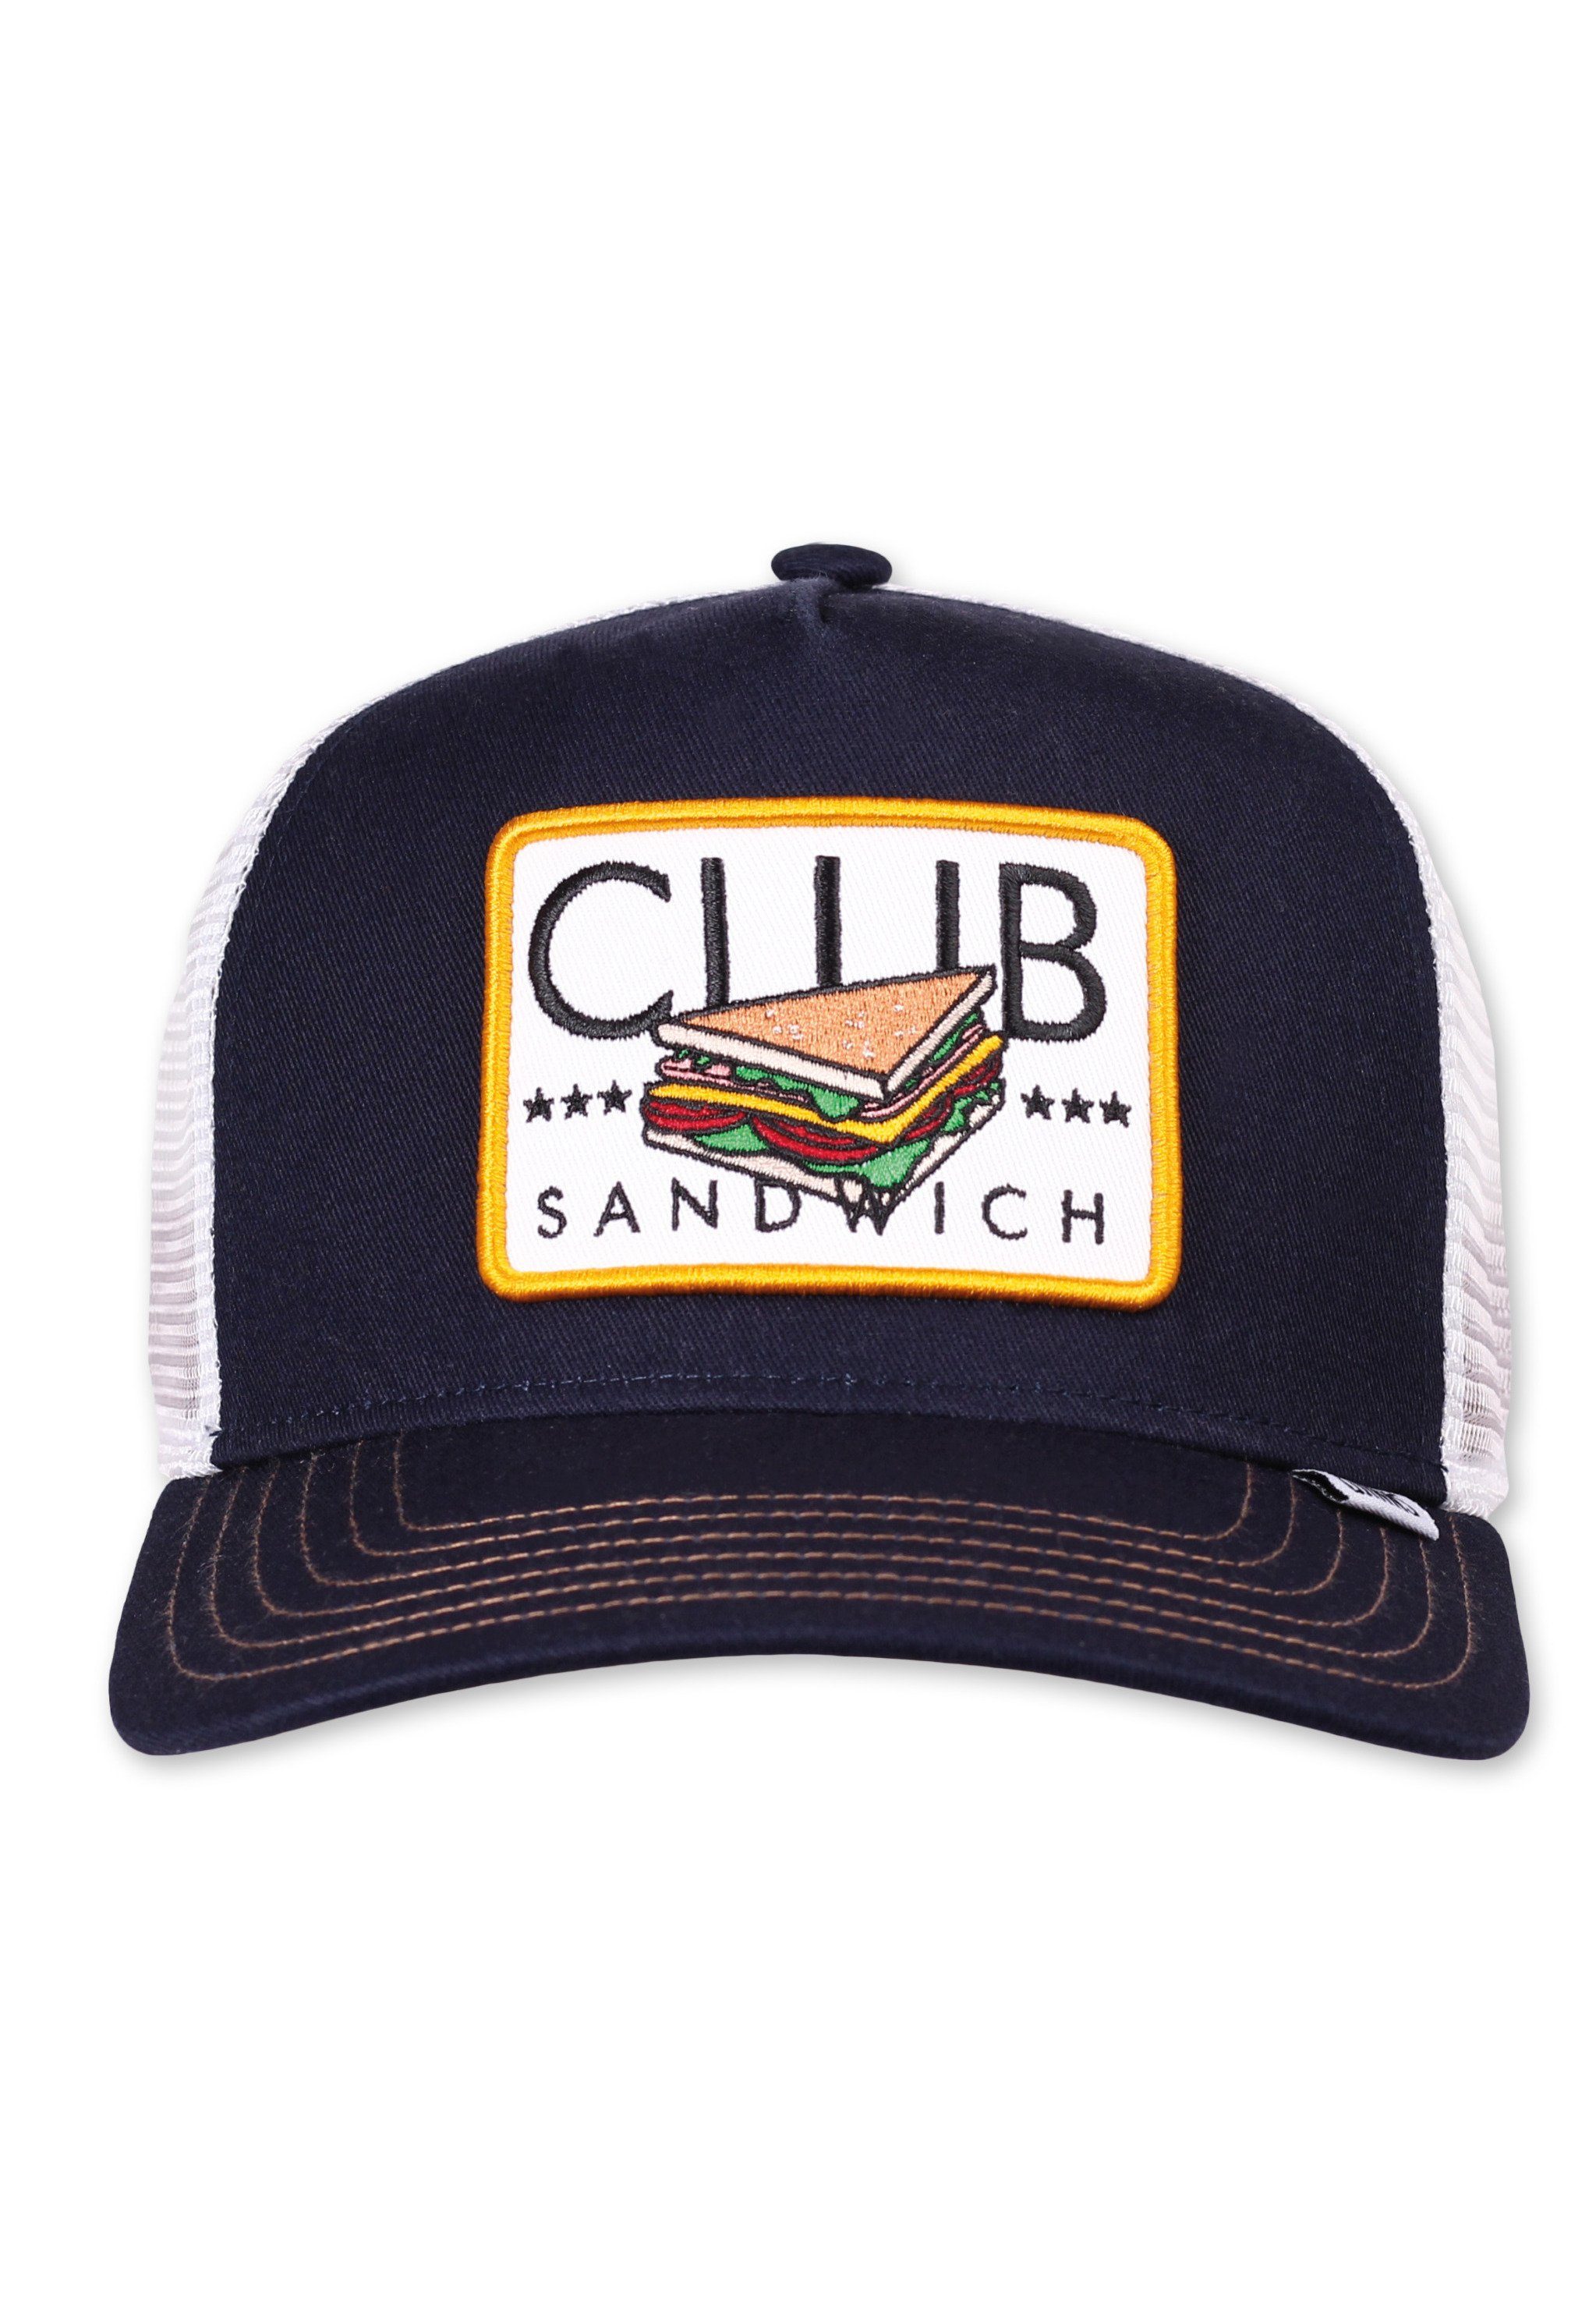 HFT Cap Club Cap Food Trucker Sandwich Djinns